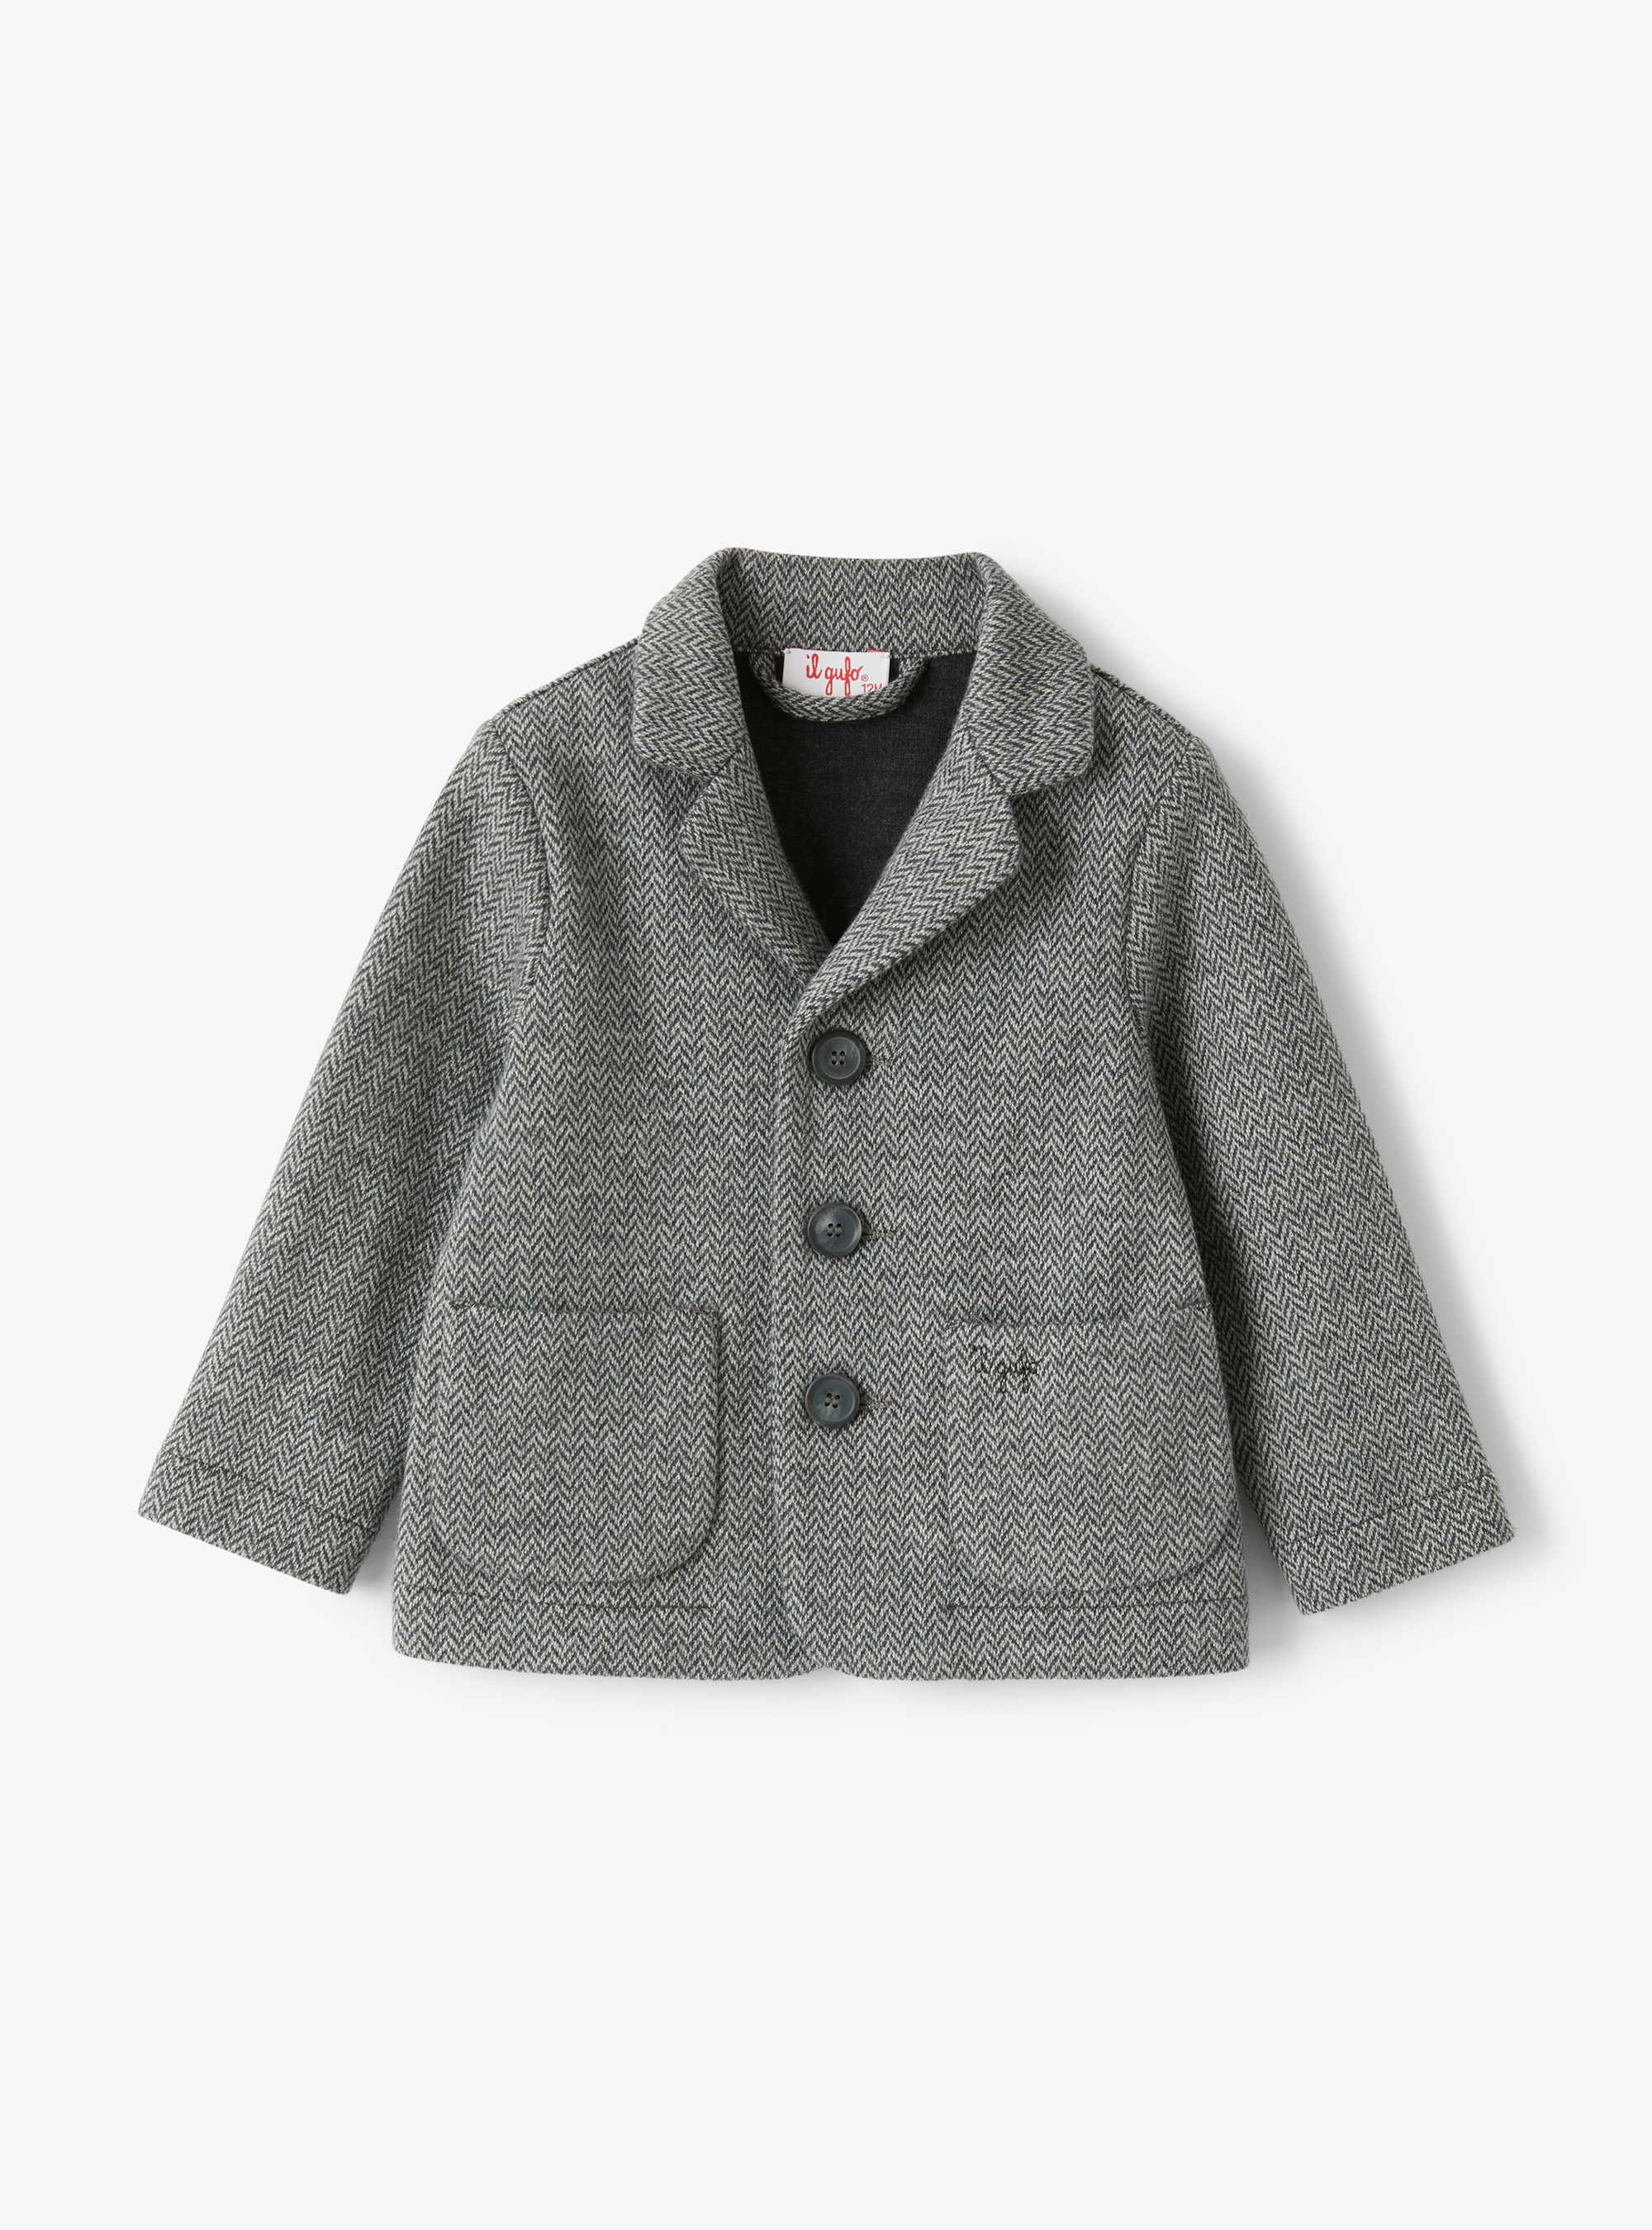 Blazer in grey herringbone-patterned cotton - Jackets - Il Gufo